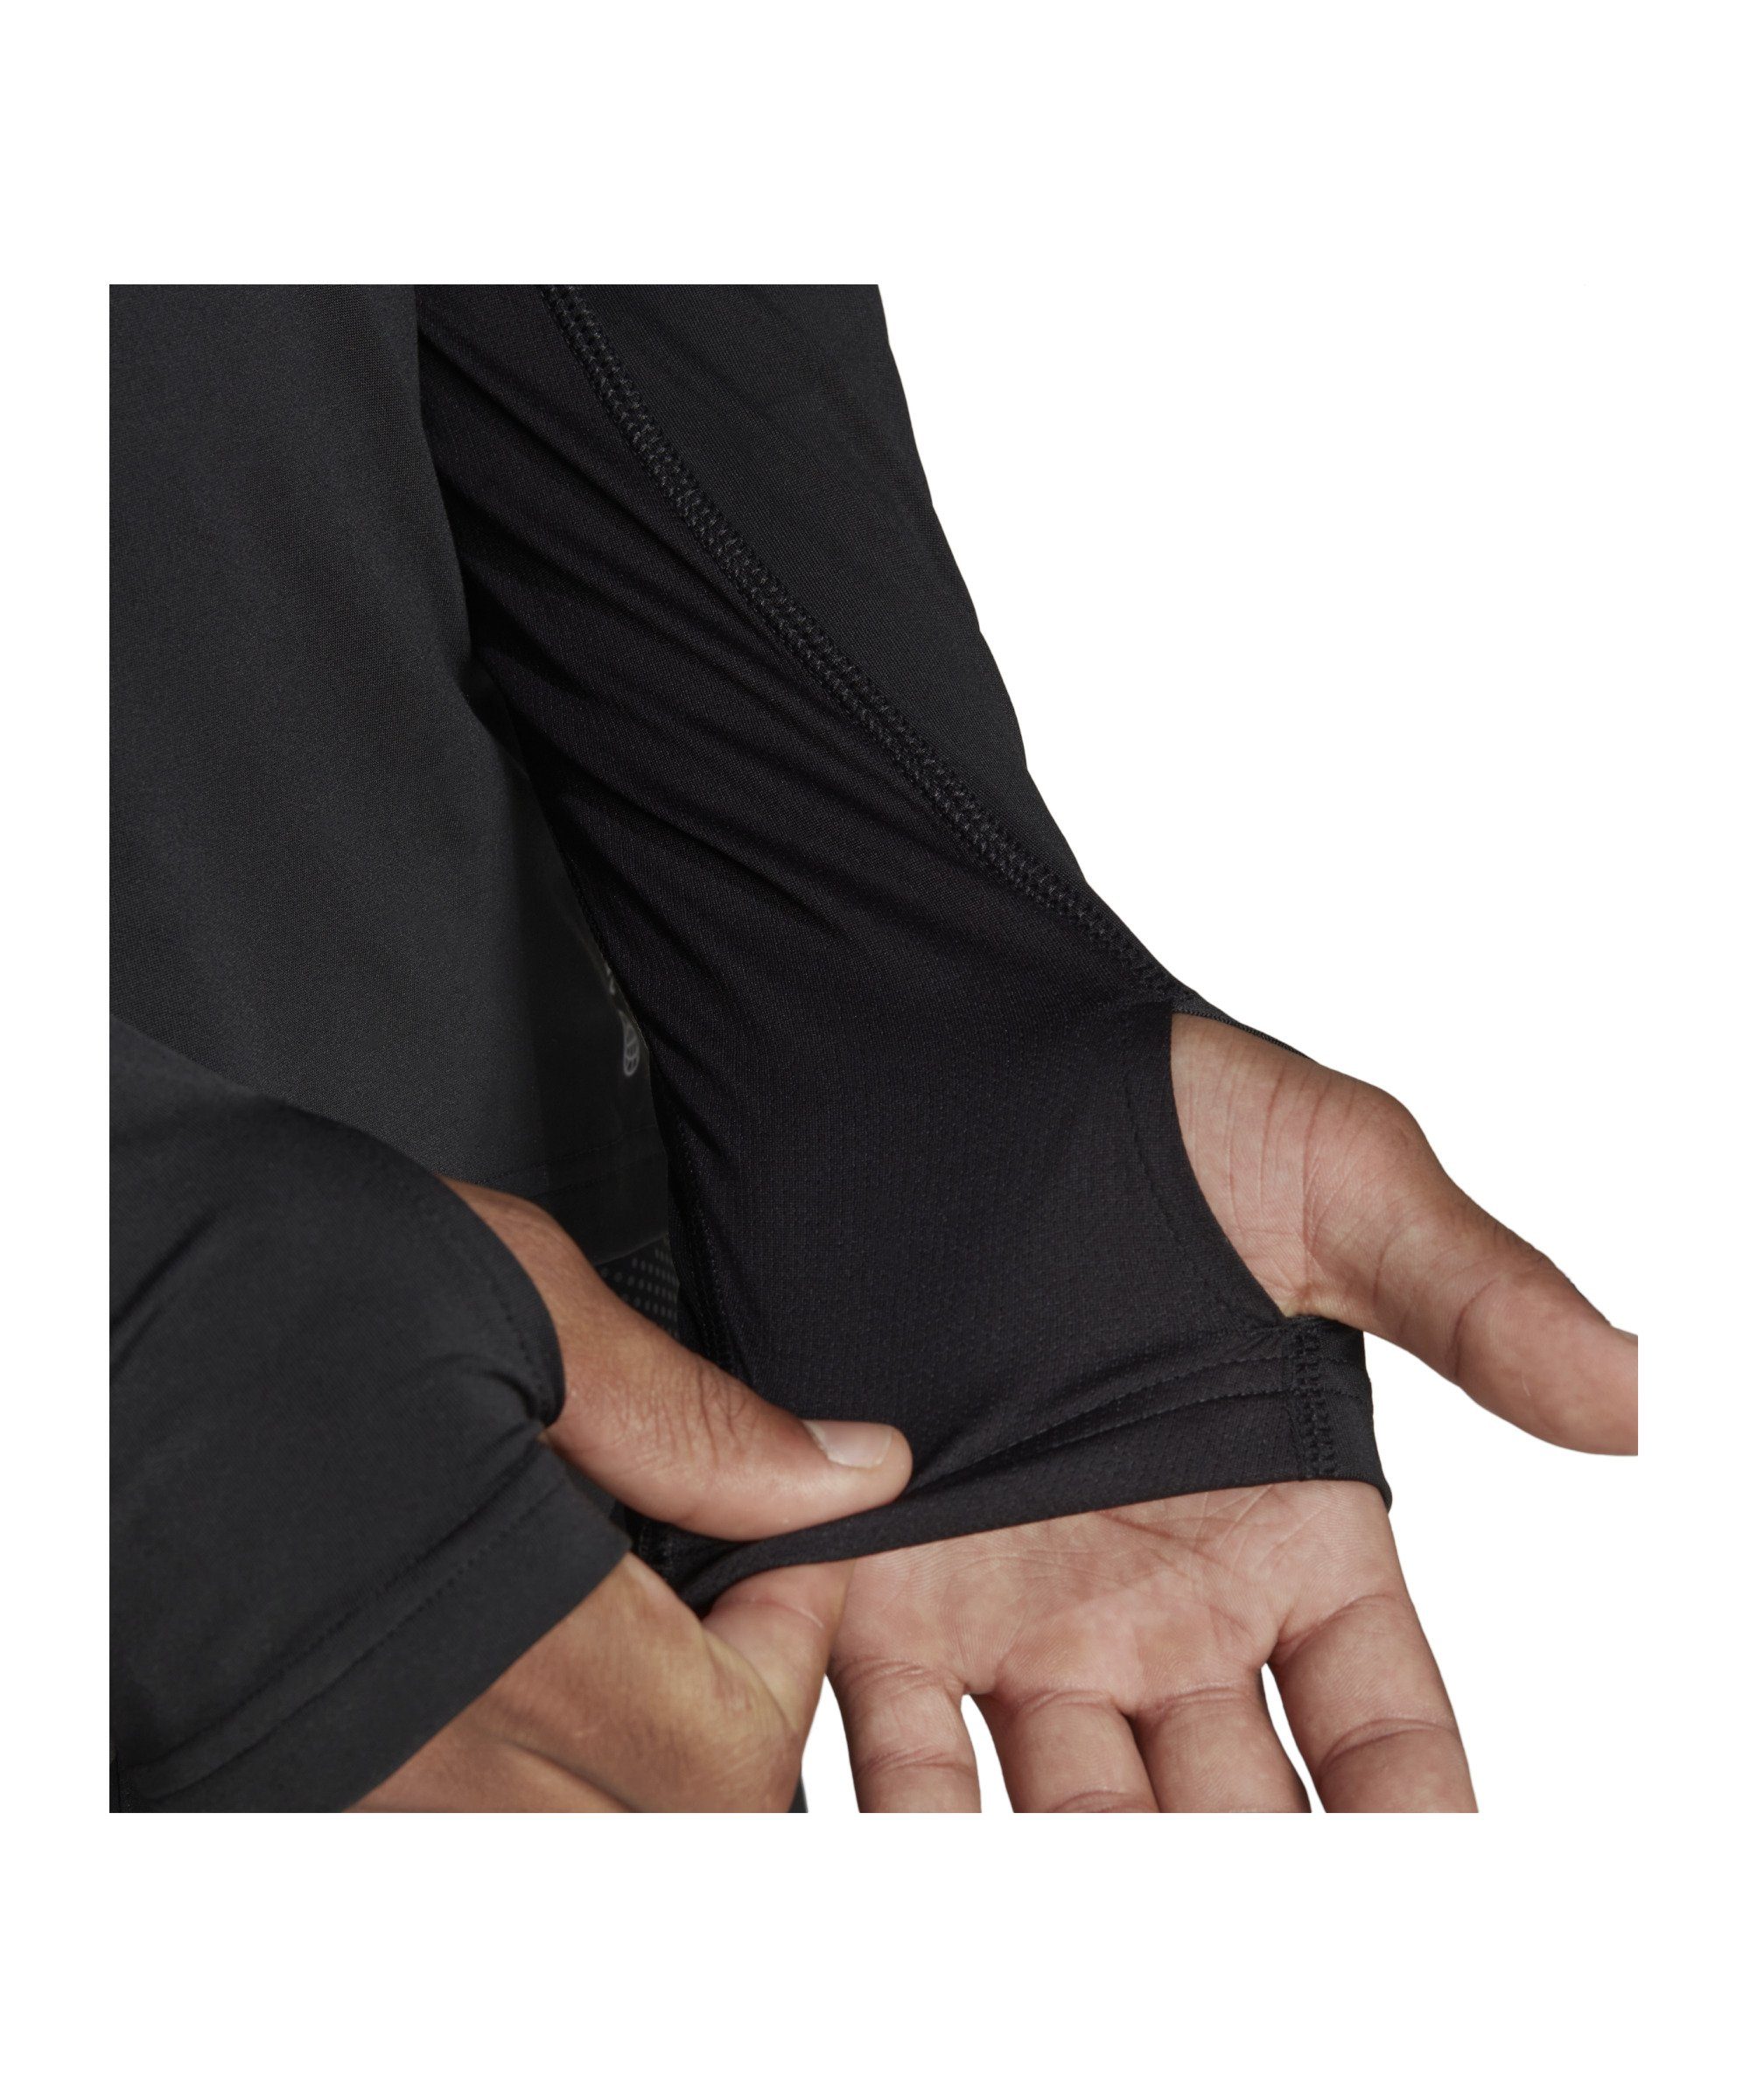 Daumenöffnung Halfzip Performance schwarz Sweatshirt Lauftop adidas